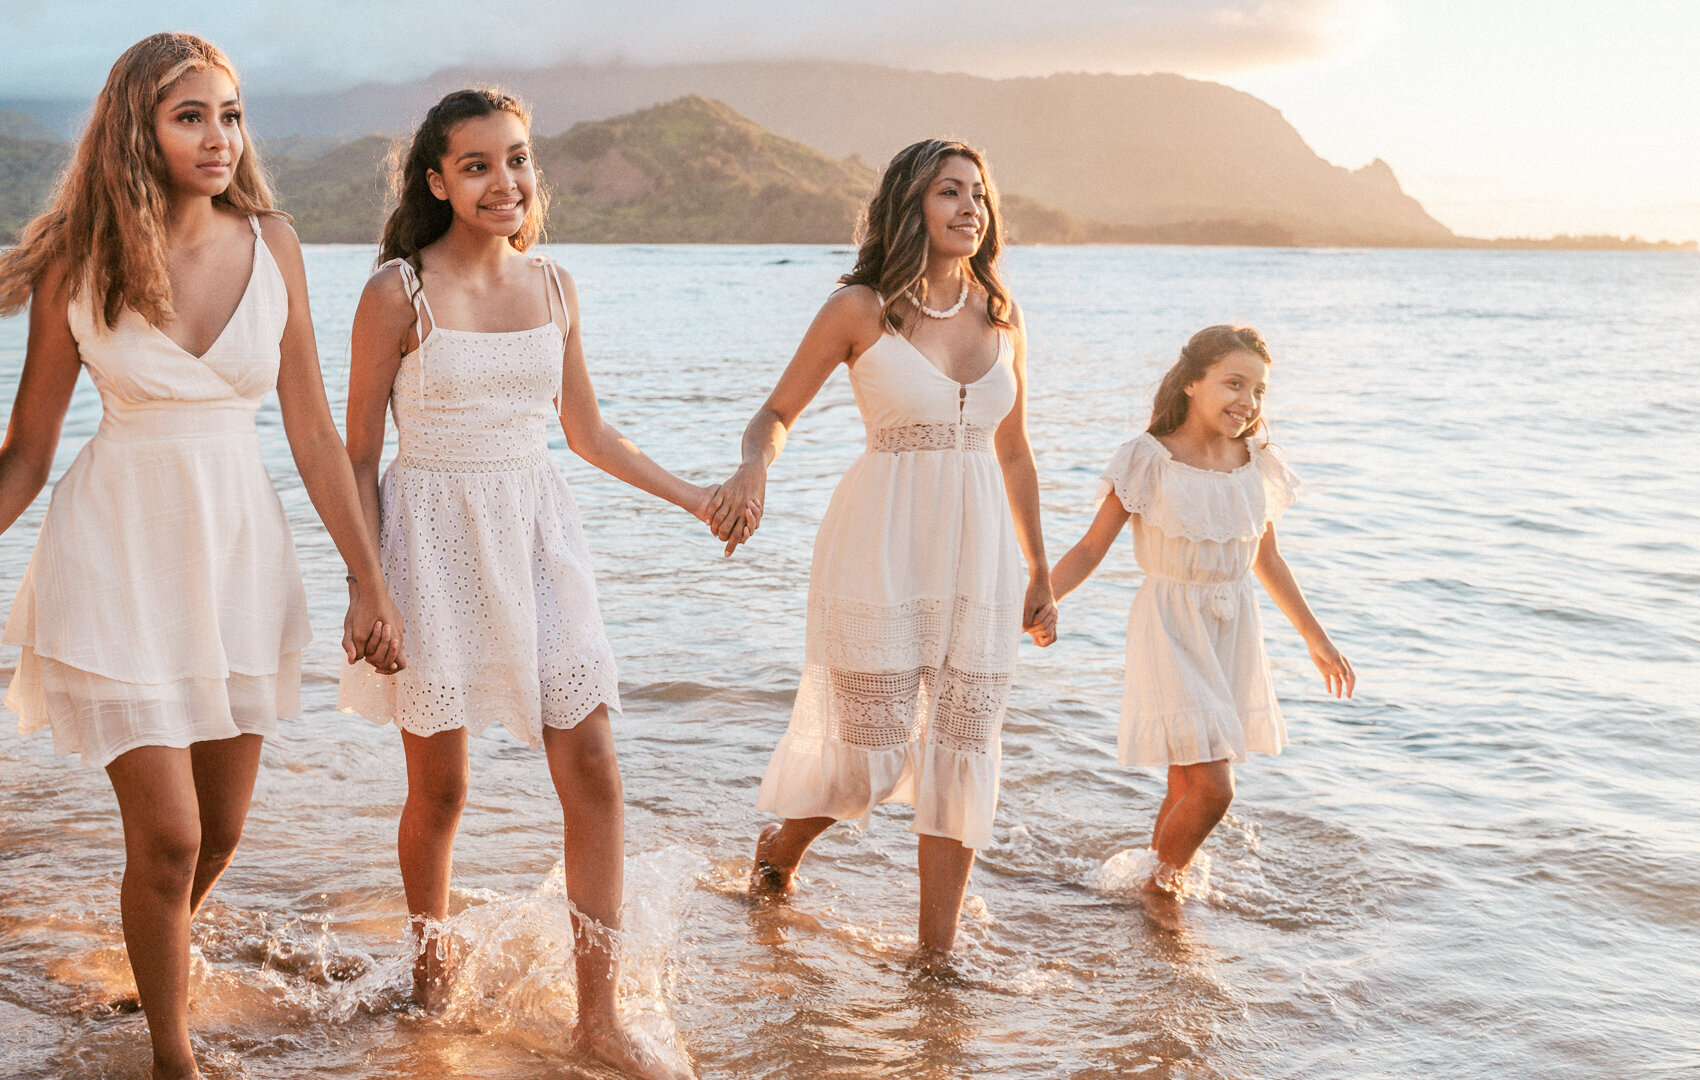 Family photographers in Hawaii